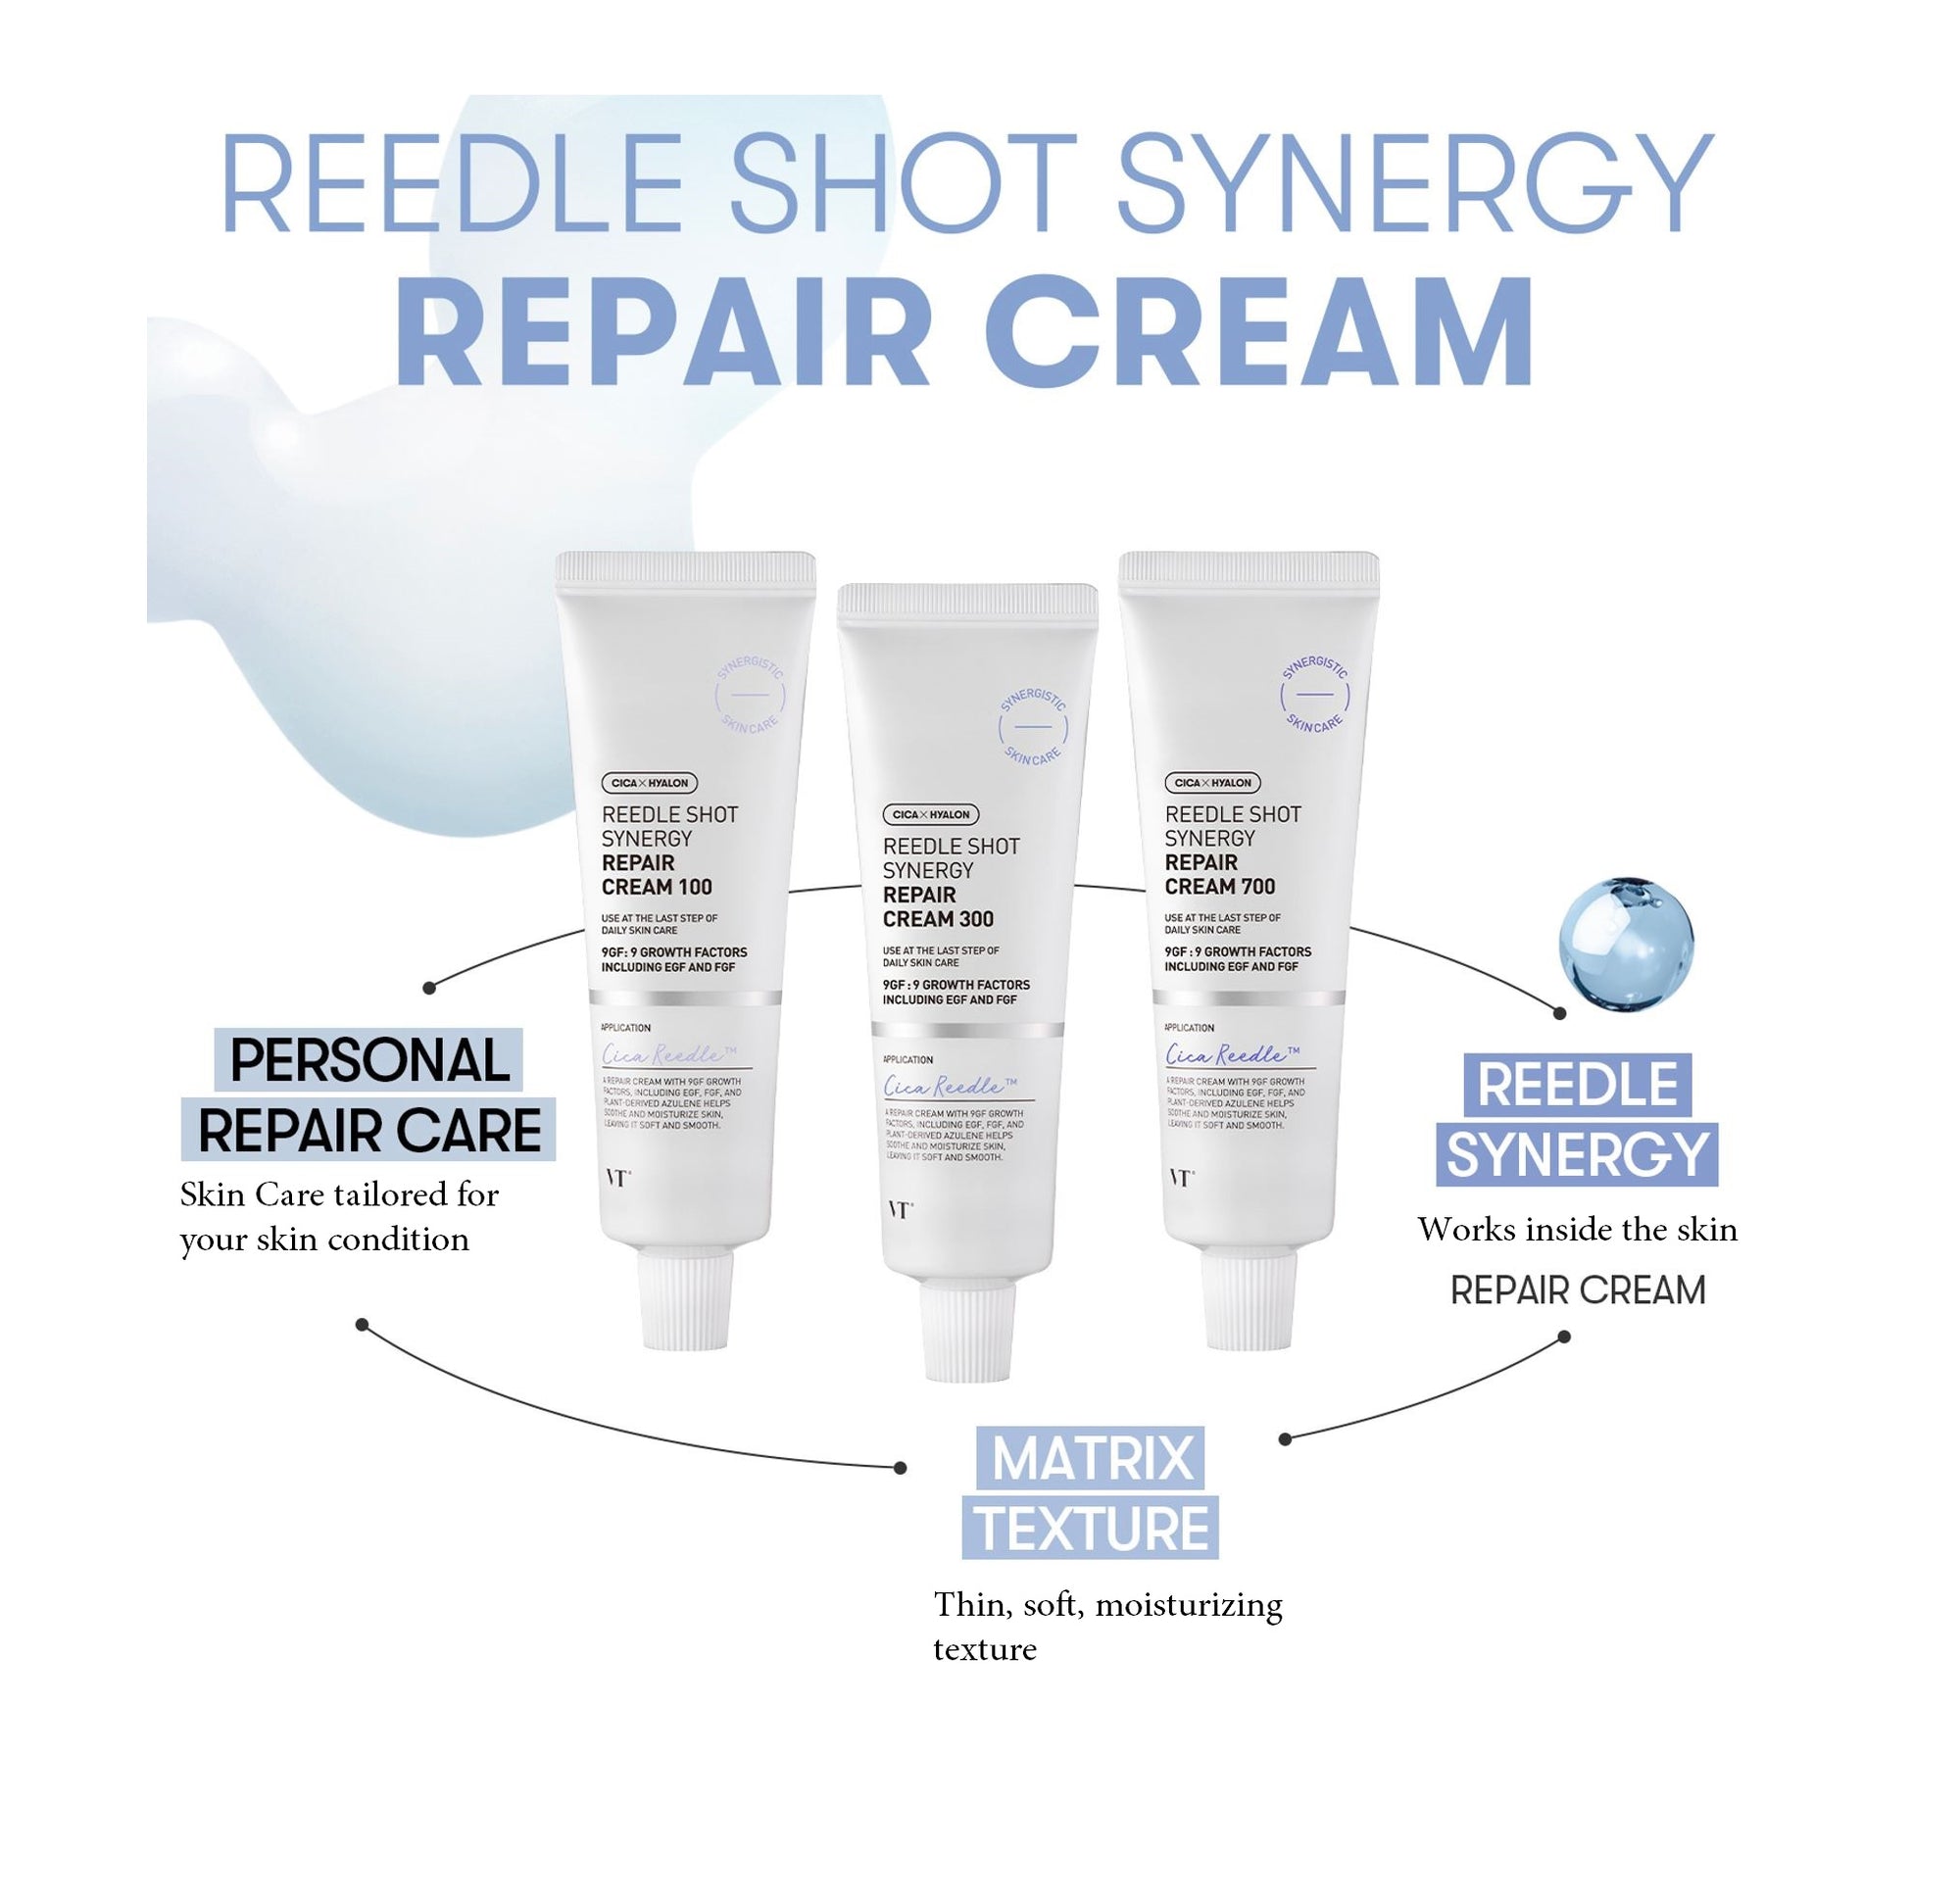 Reedle Shot Synergy Repair Cream 700